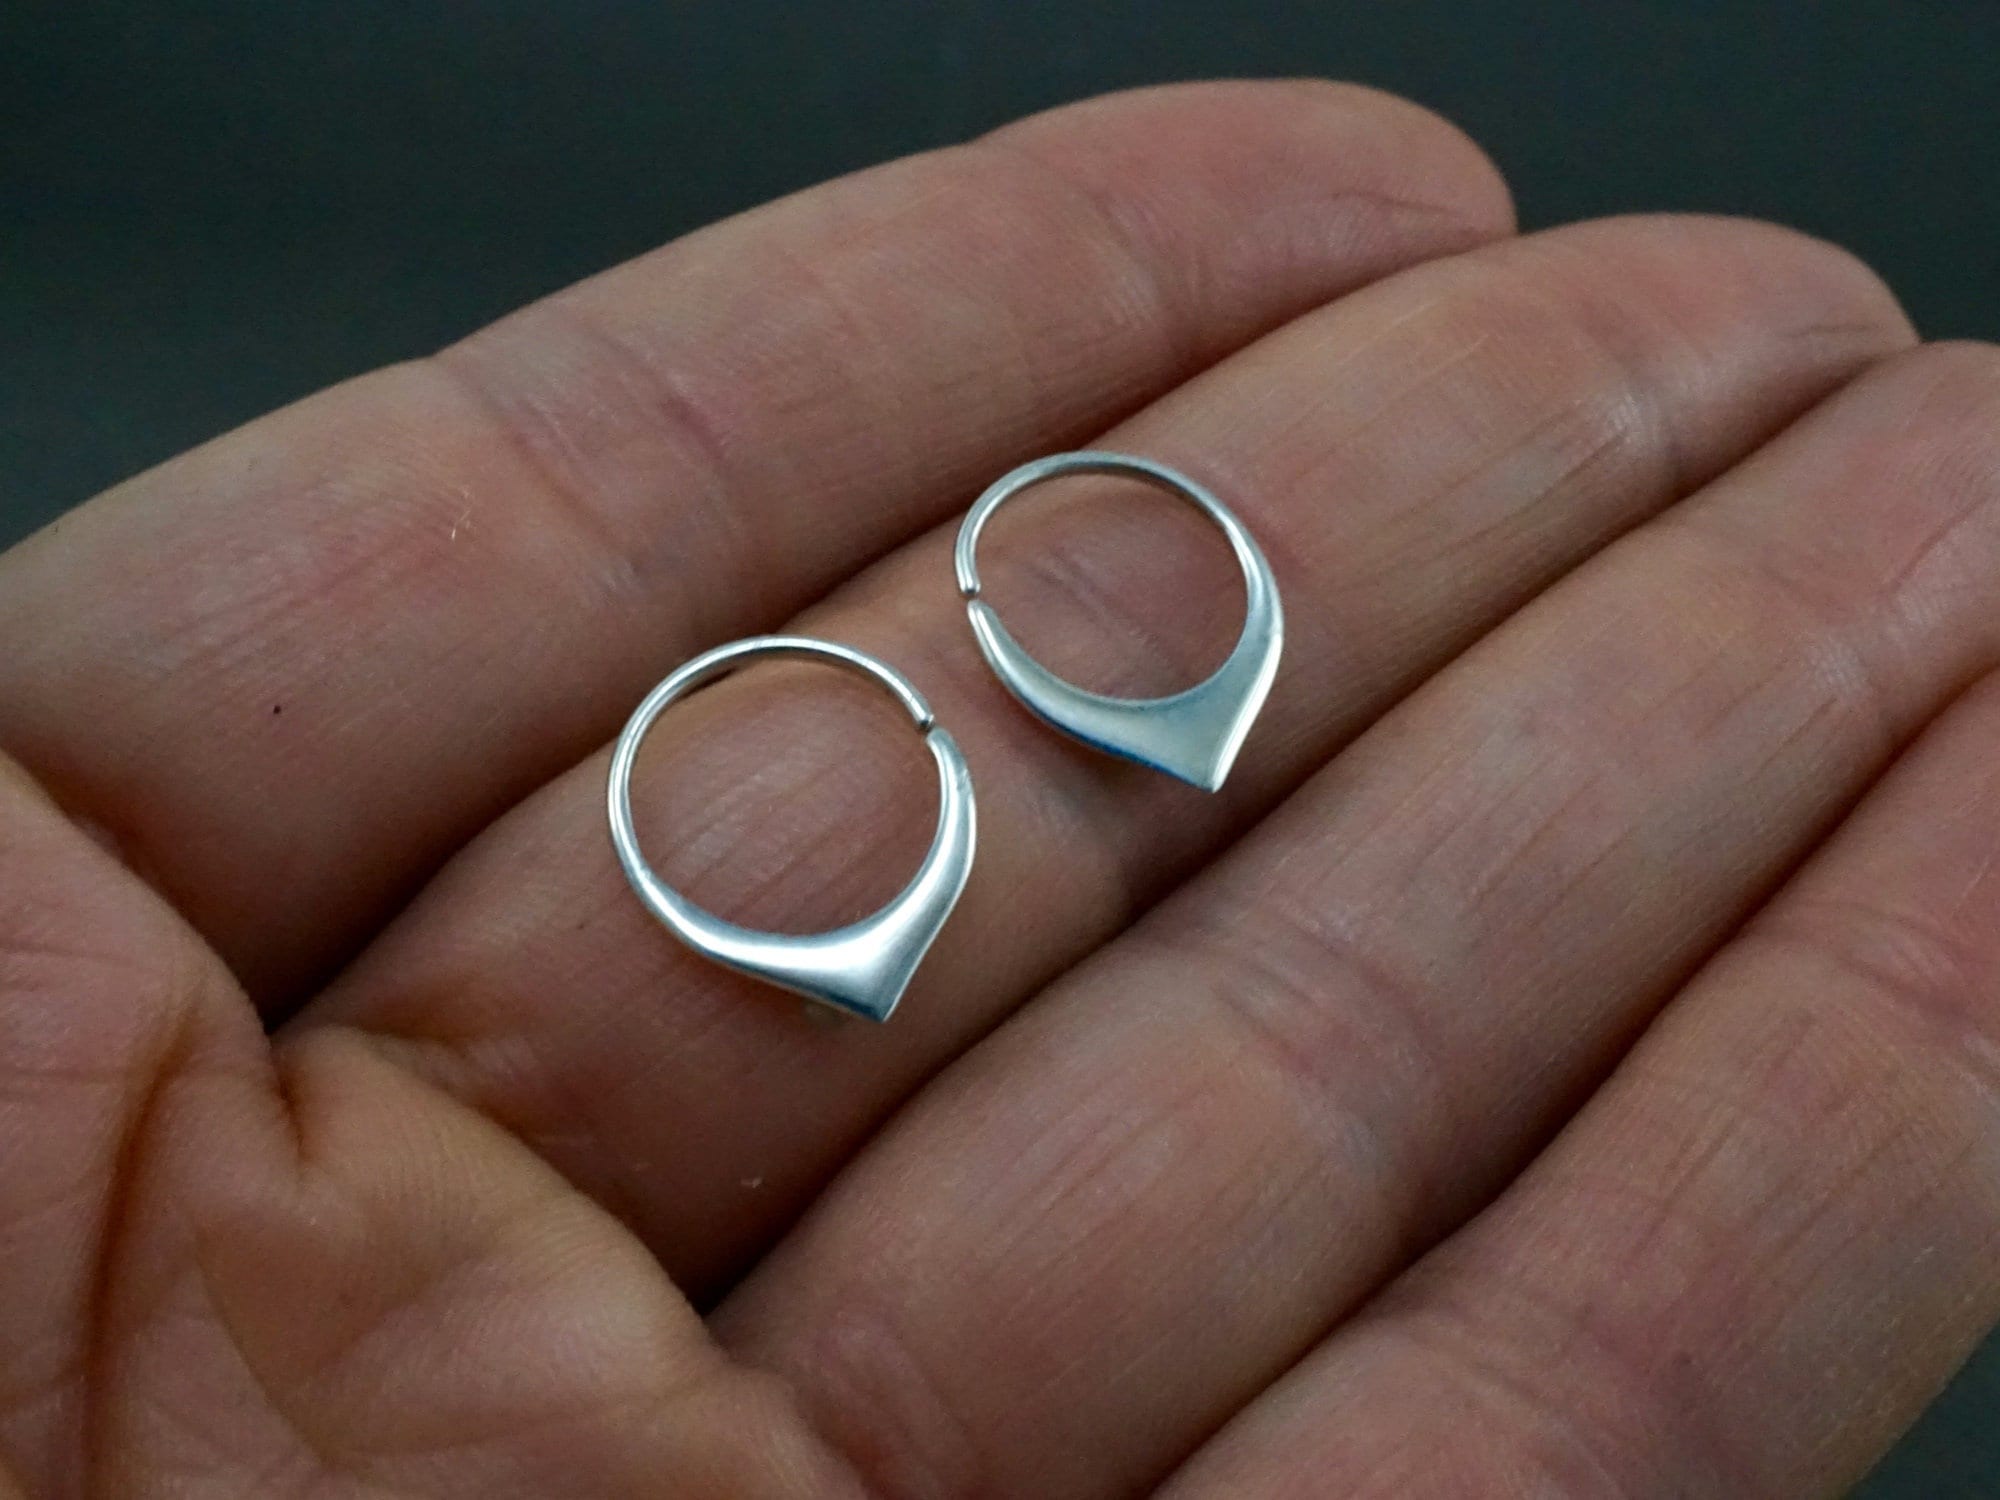 9mm Tiny Petal Hoops Earrings  - Cartilage, Helix, Daith, Septum - Sleeper Hoops (B270)